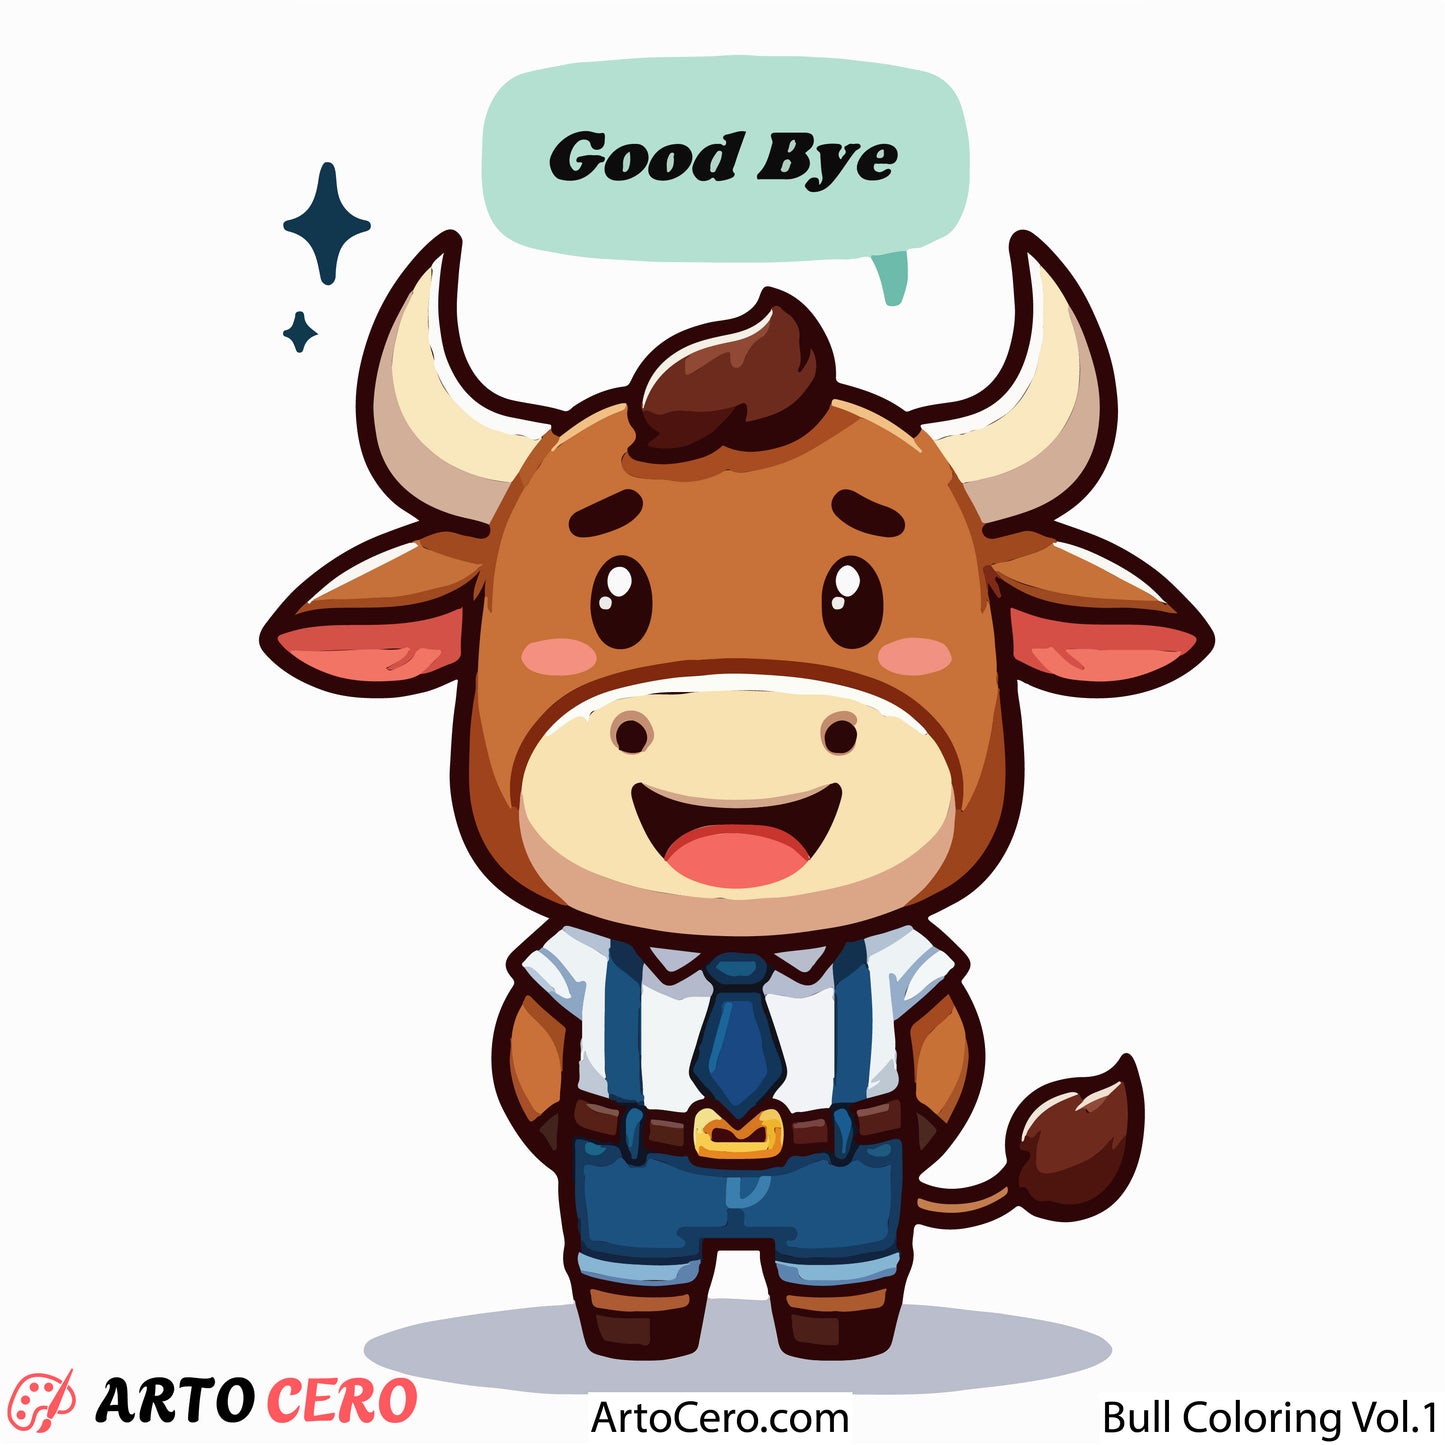 Bull Coloring Digital Book Vol.1 - ArtoCero